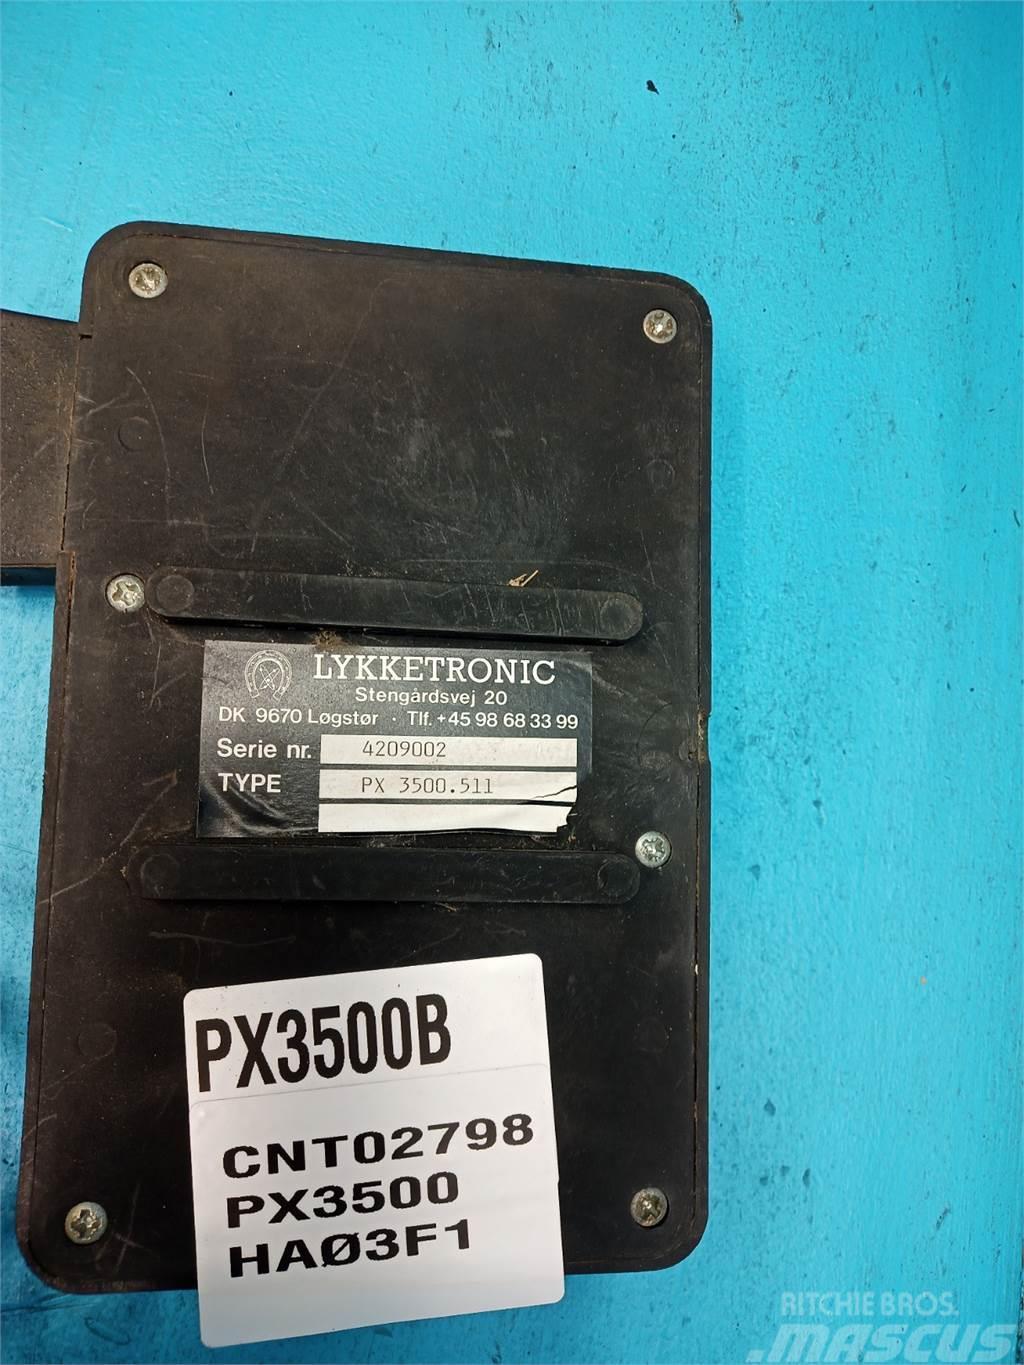  Lykketronic PX3500 Electrónicos